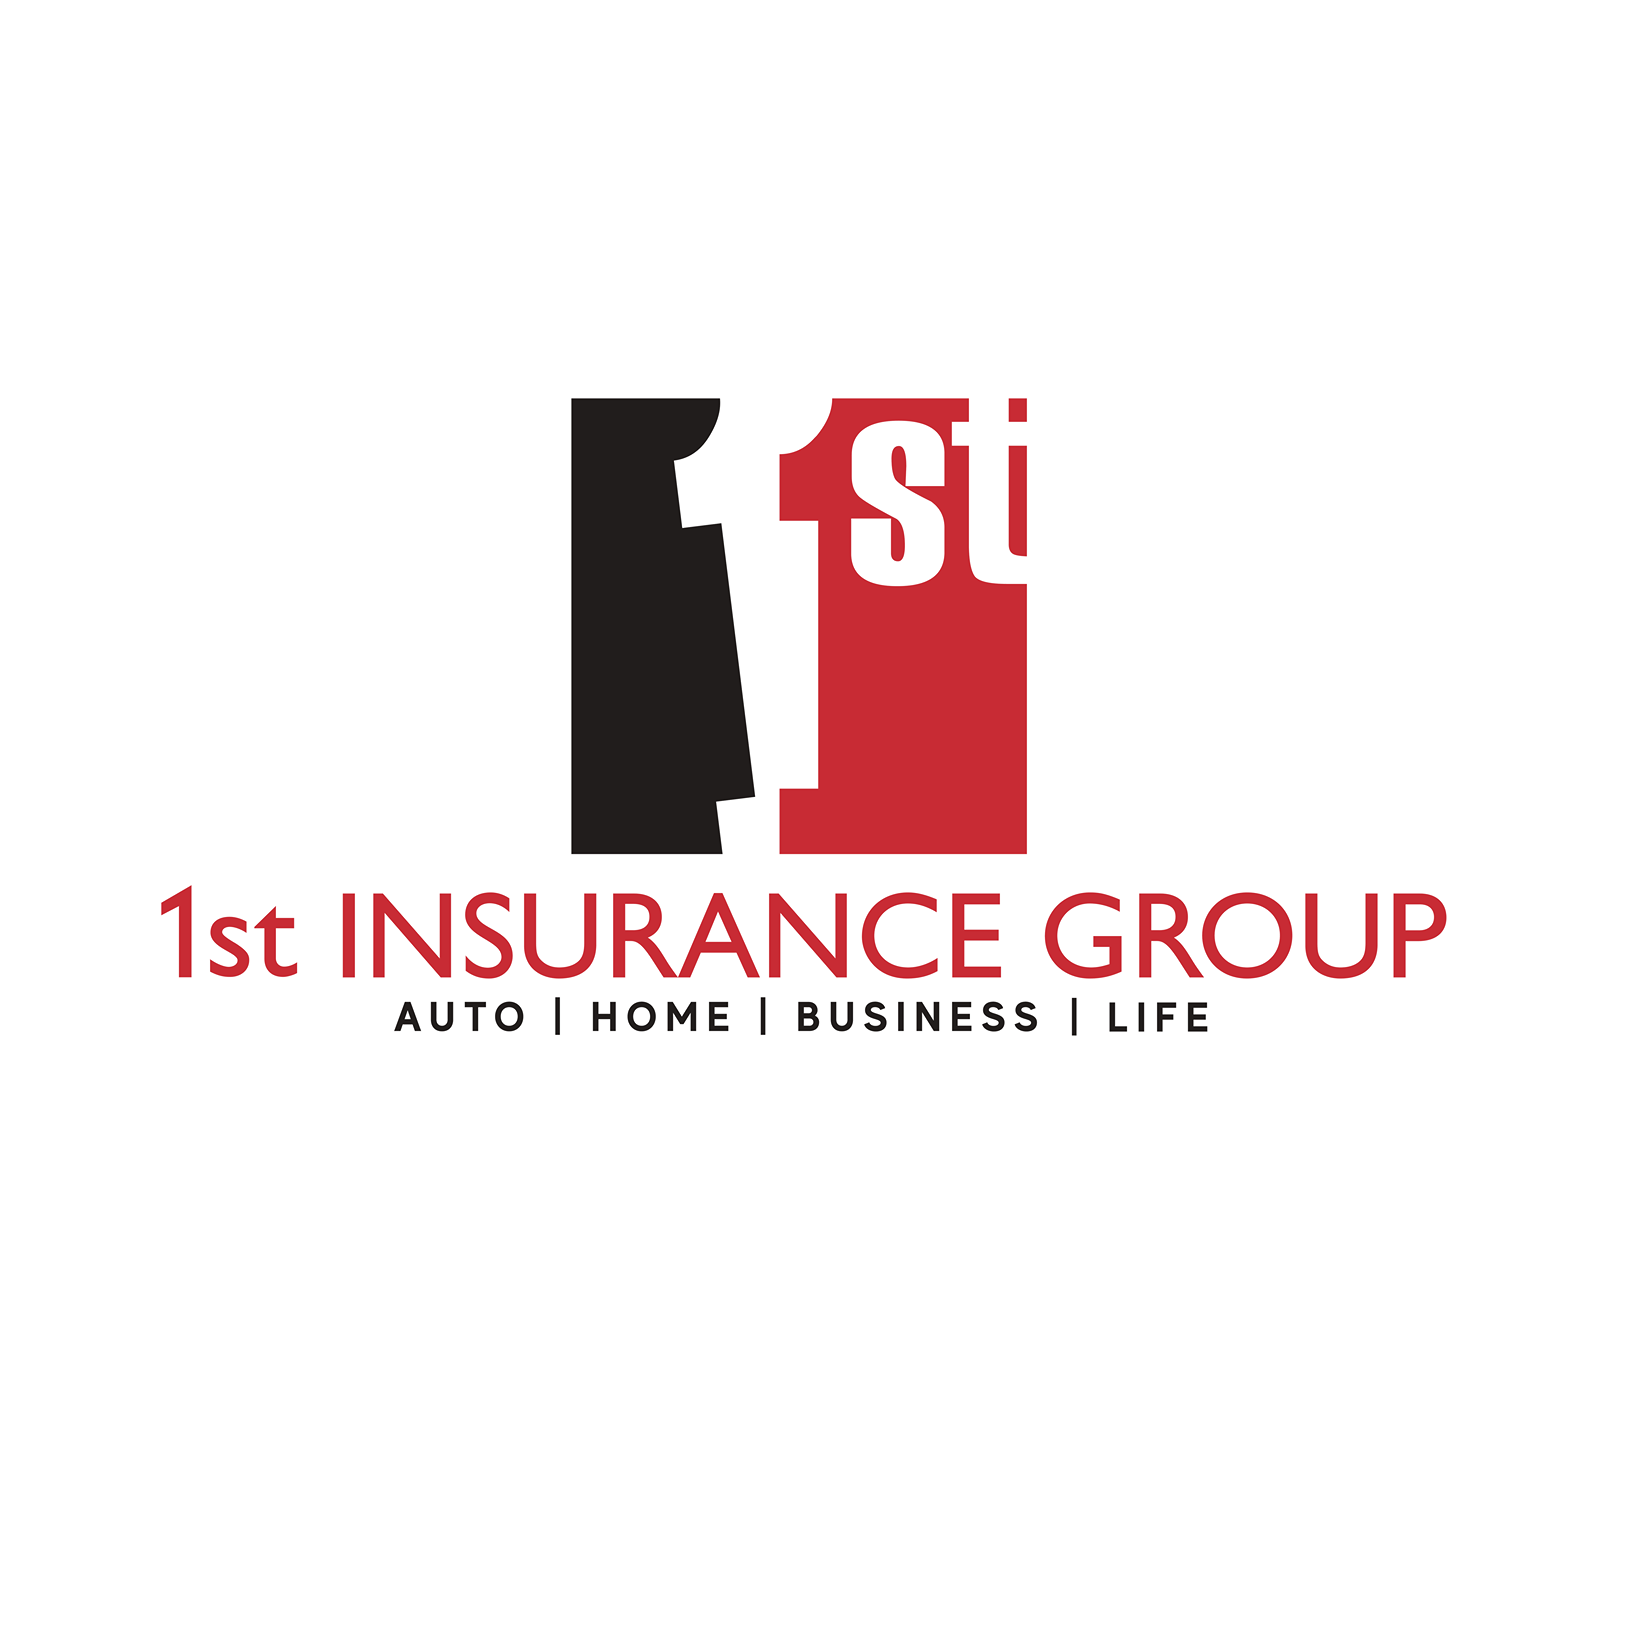 Hagerty-Insurance-Logo - First Newnan Insurance Group, Inc